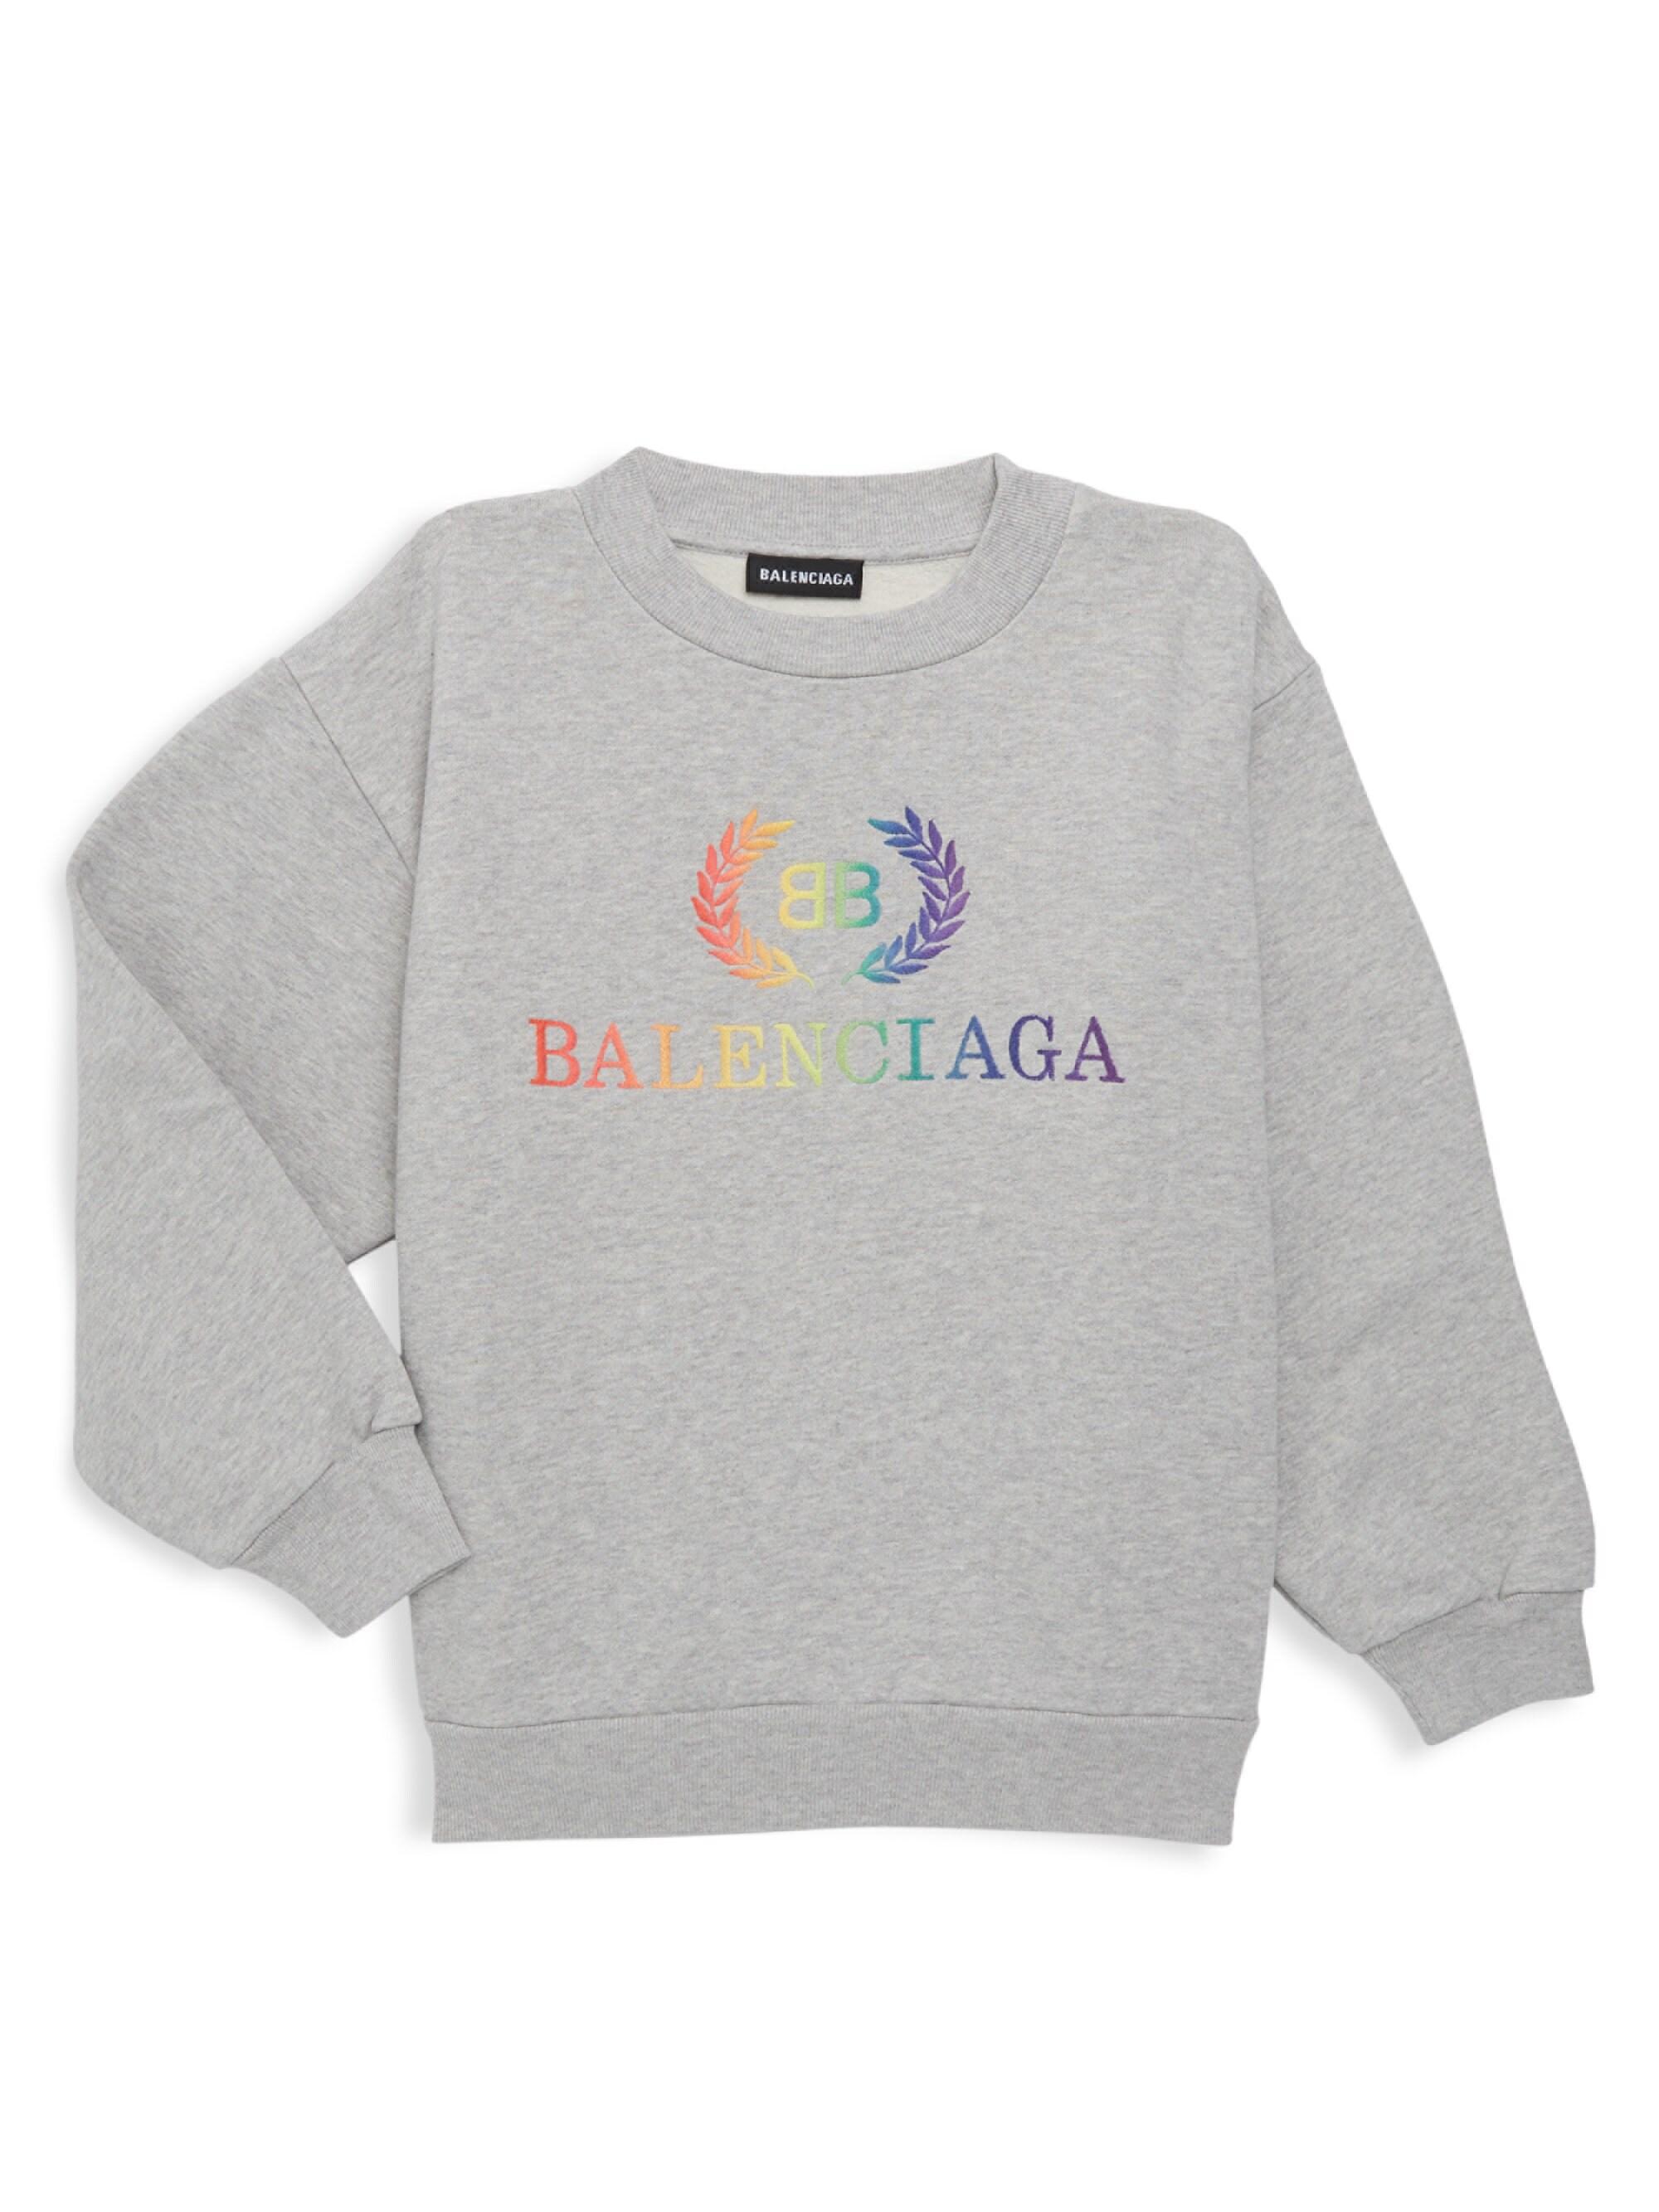 Balenciaga Rainbow Logo Crest Sweatshirt in Heather Grey (Gray) - Lyst